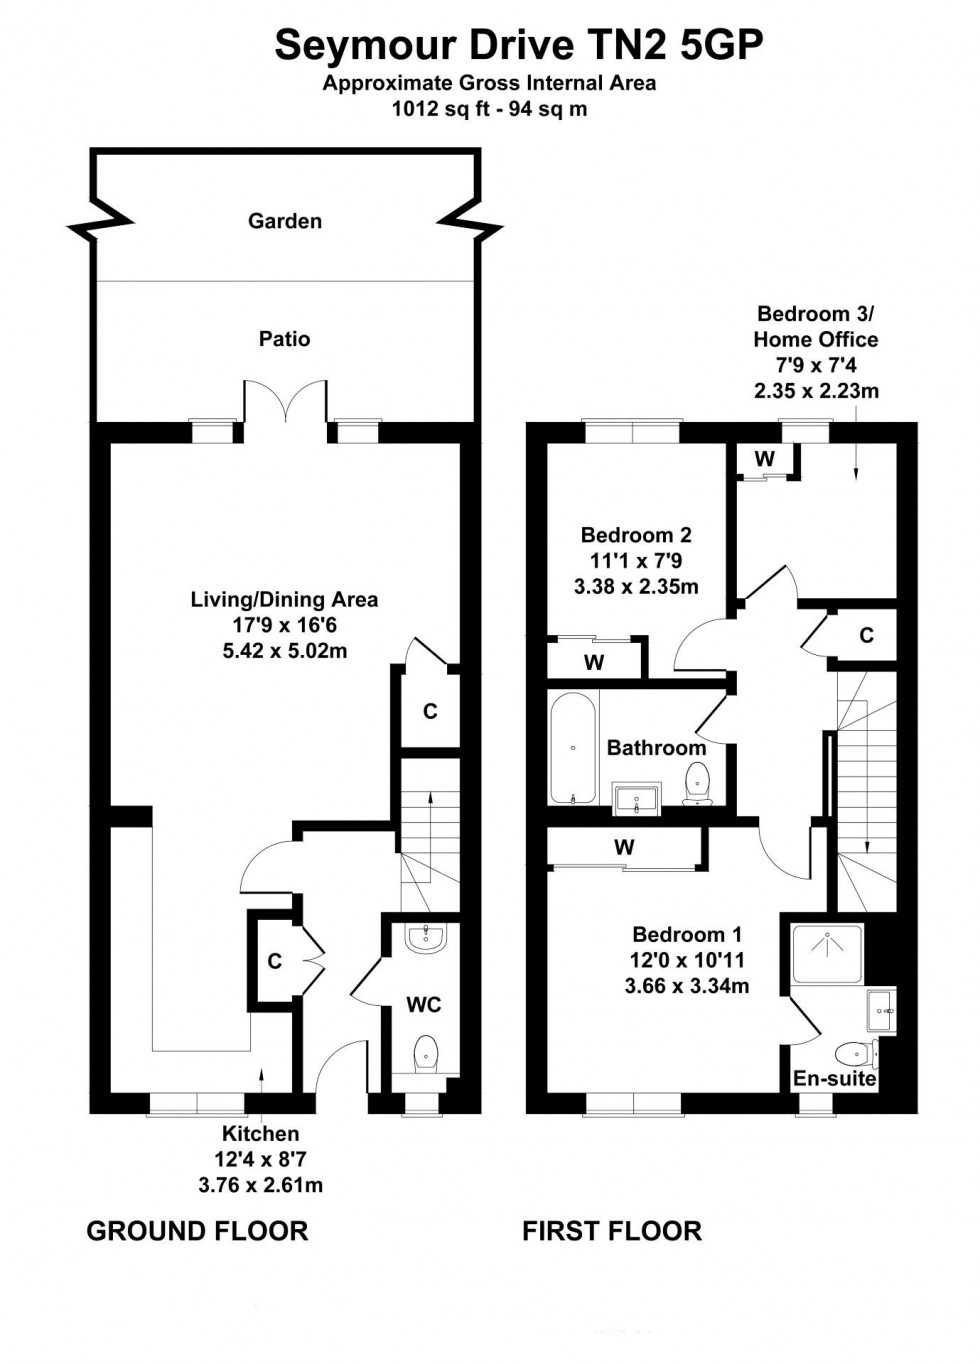 Floorplan for 3 Bedroom Semi-Detached House, Seymour Drive, Tunbridge Wells